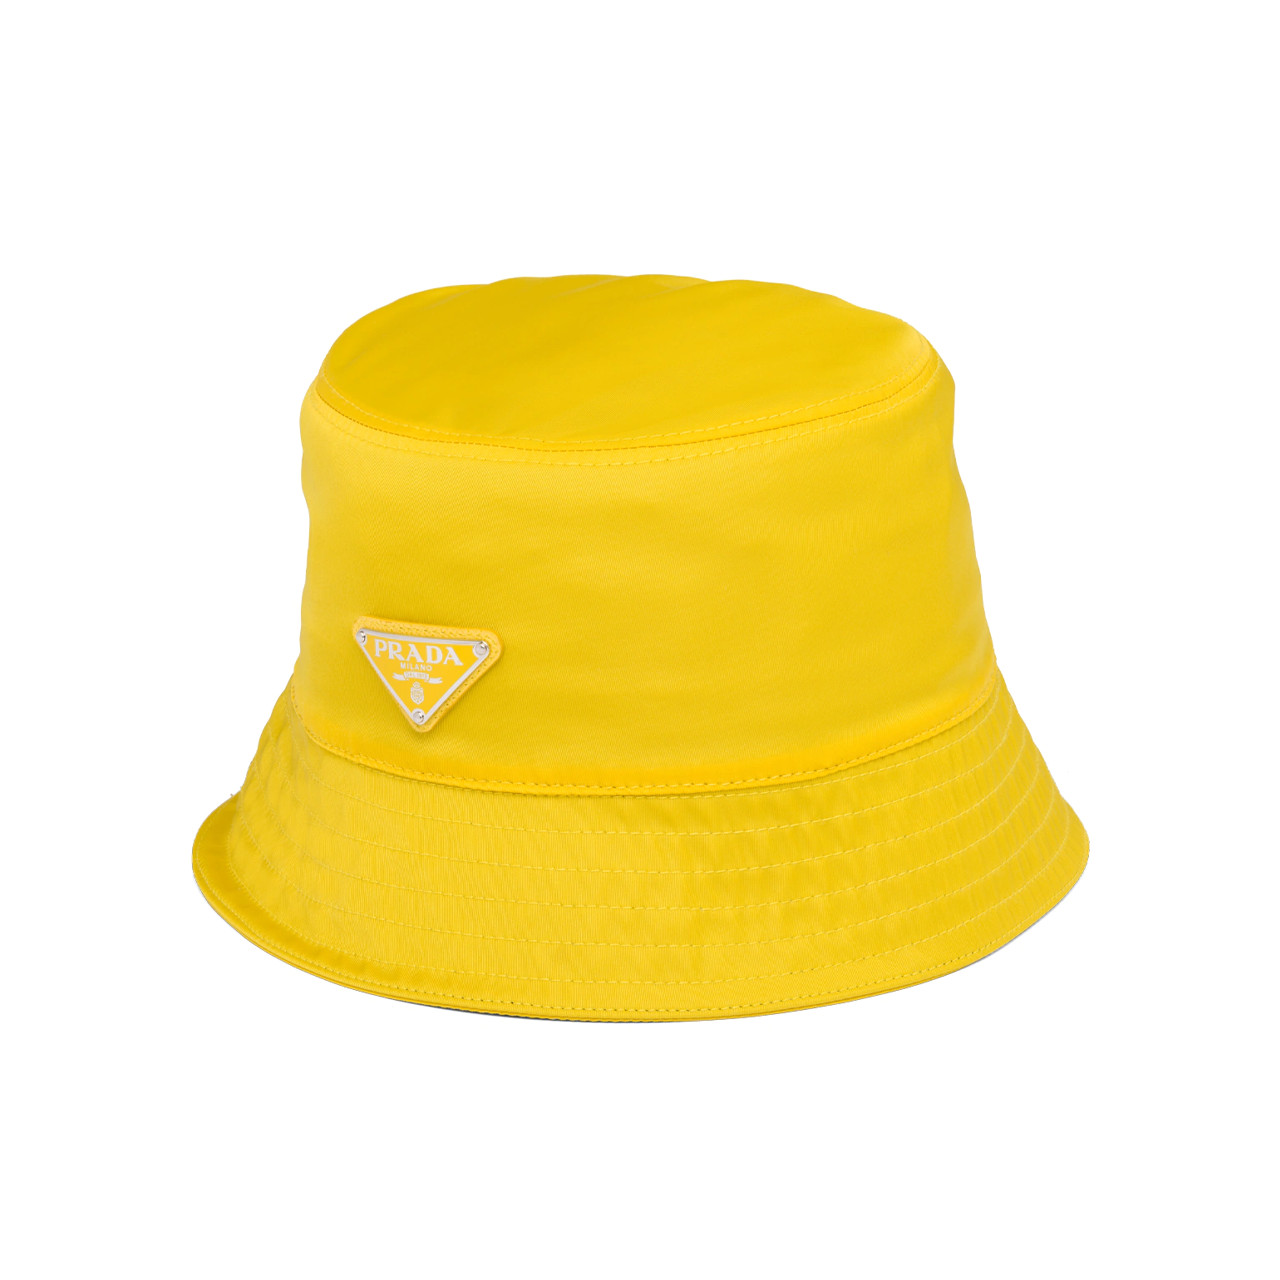 Prada bucket hat yellow